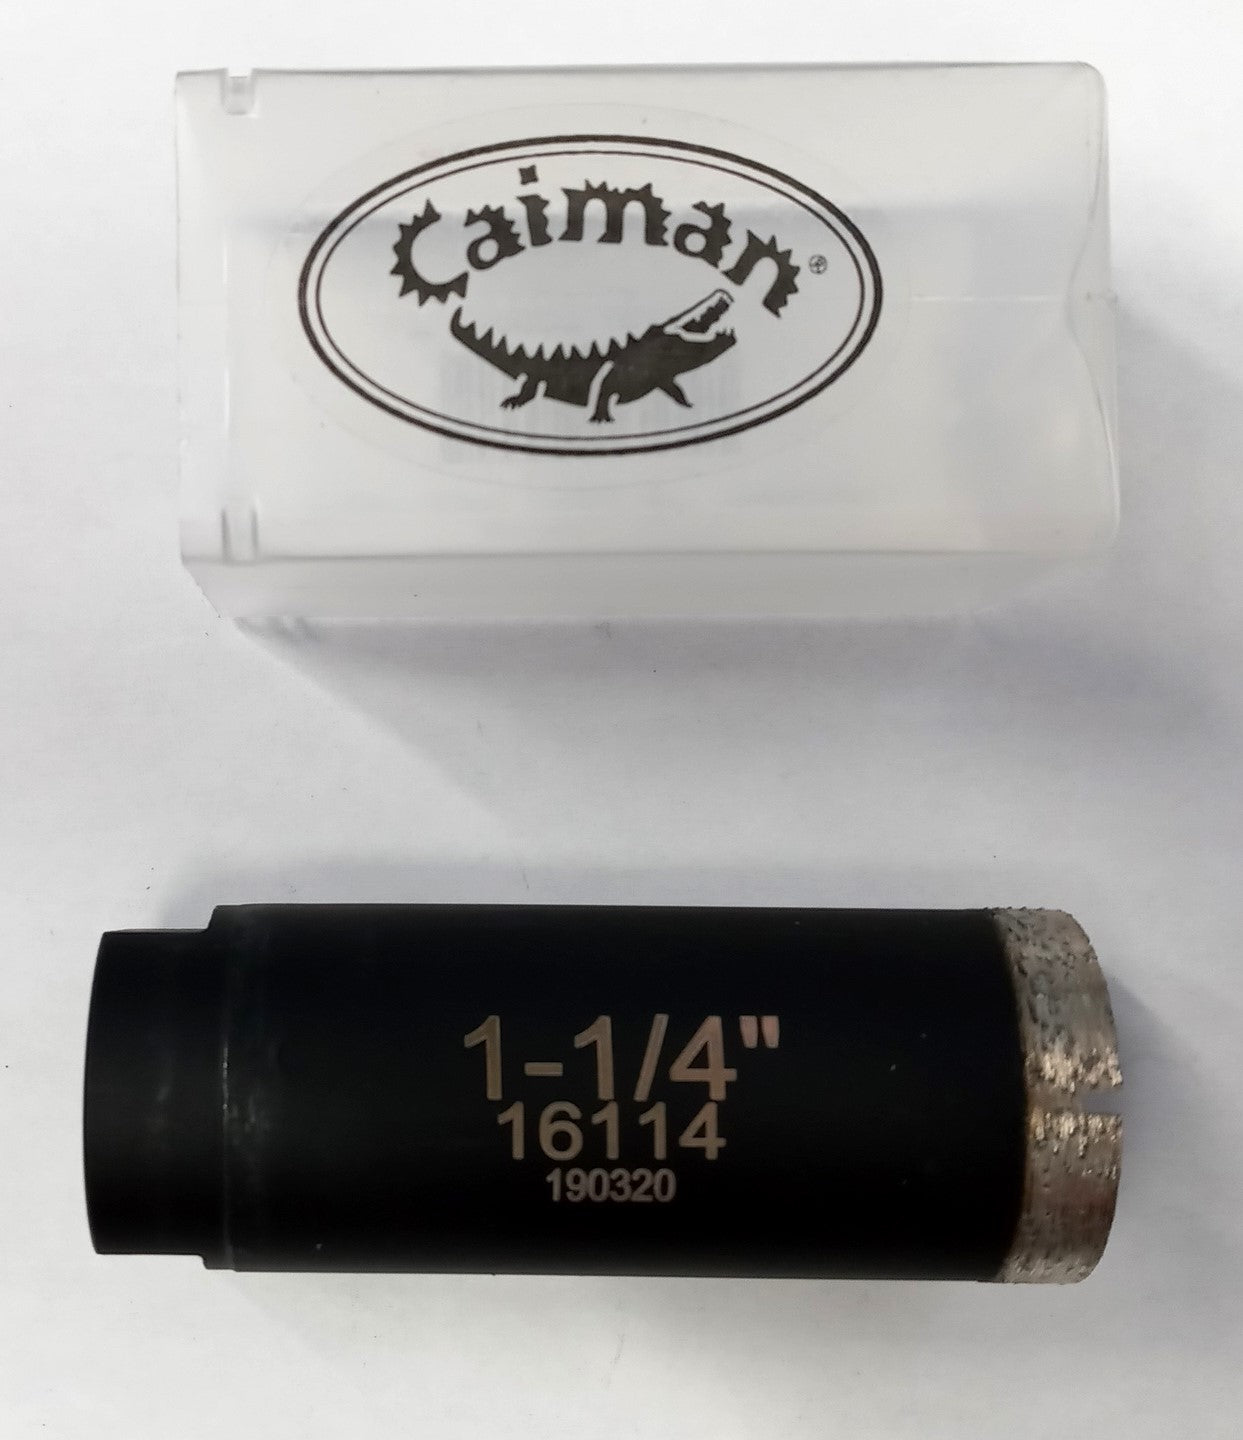 Caiman 16114 1-1/4" Thin Wall Core Drill Bit